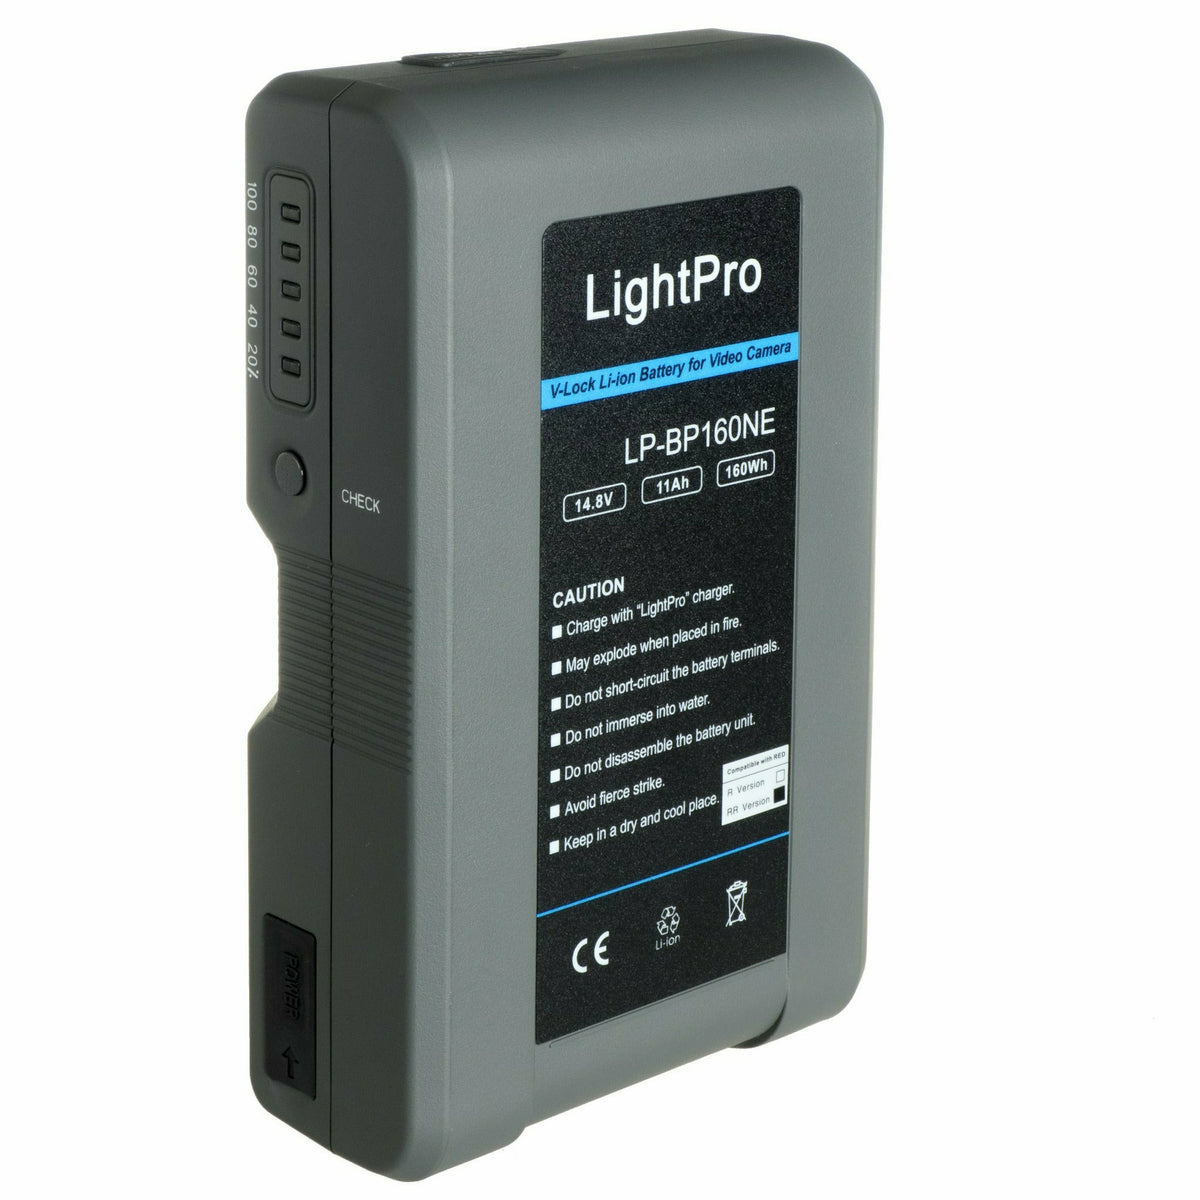 LightPro LP-BP 160NE 159.8wh Li-ion V-Lock / VLock Battery with 5v USB - Dragon Image